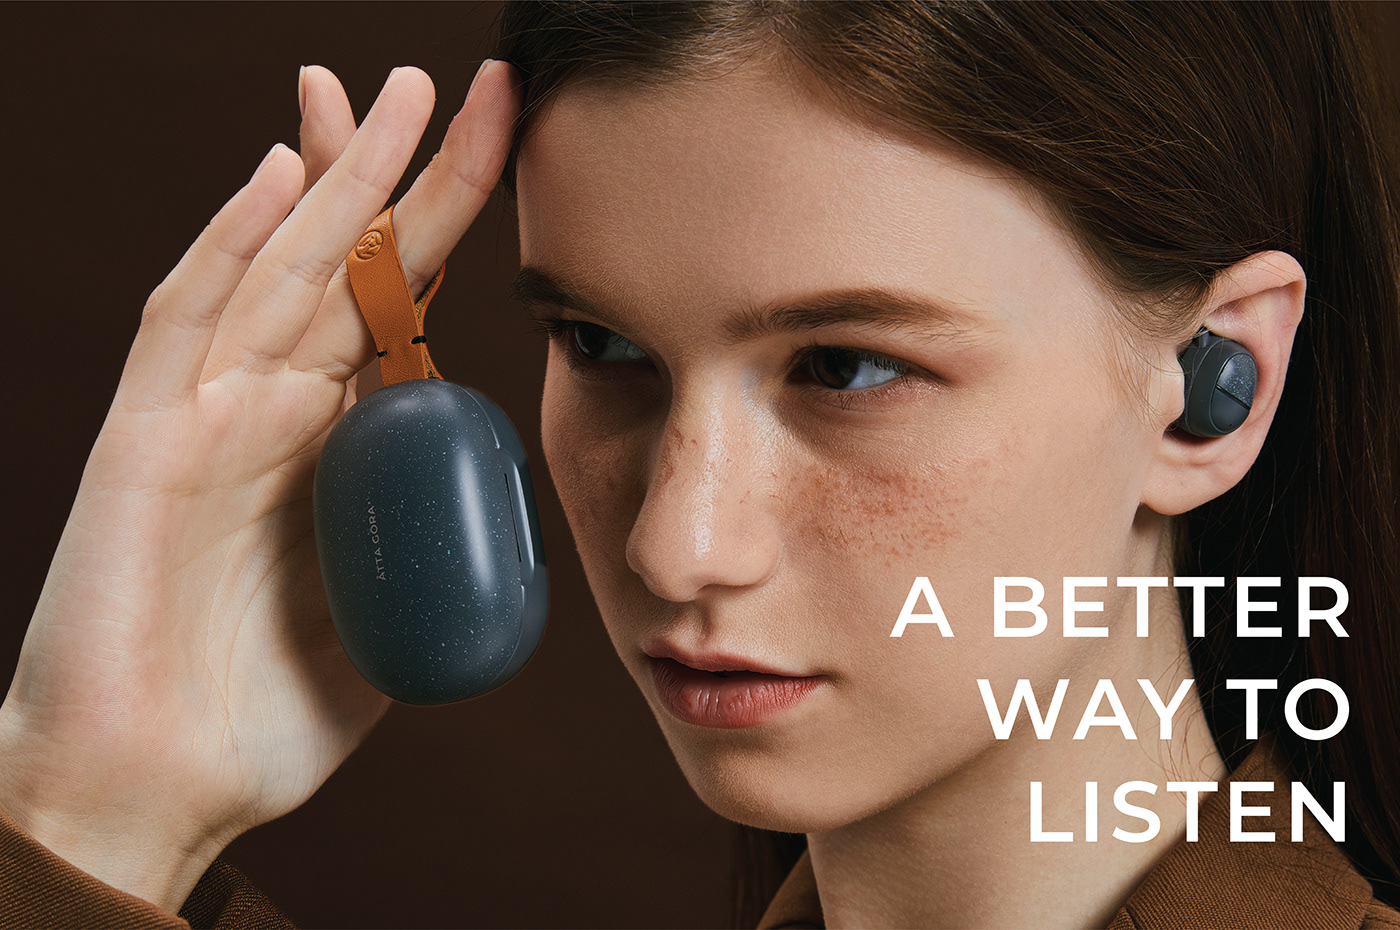 TWS earphone Earbuds industrial design  product design  wireless Audio brand